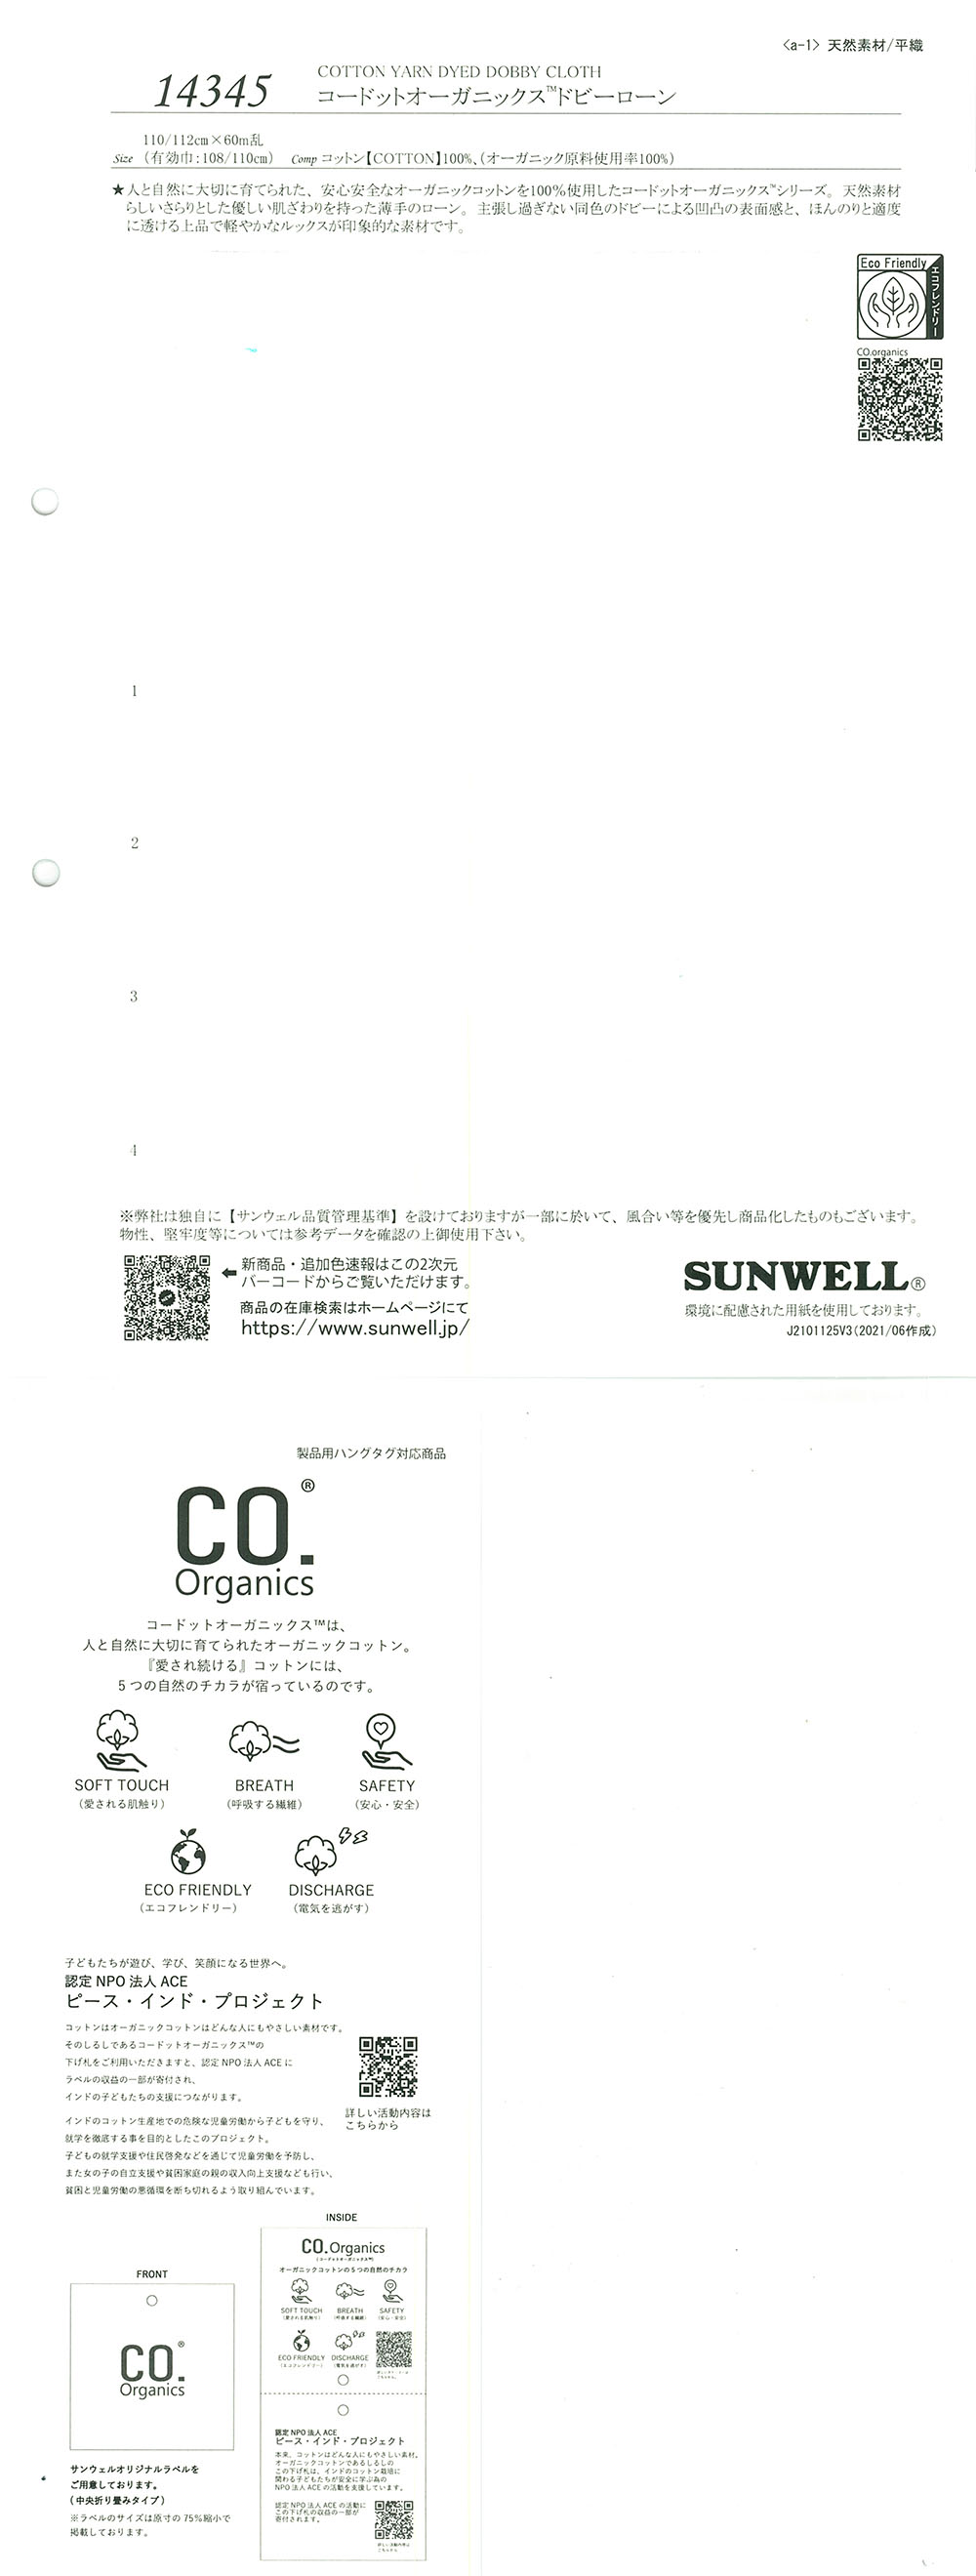 14345 Césped Dobby De Cordot Organics®[Fabrica Textil] SUNWELL